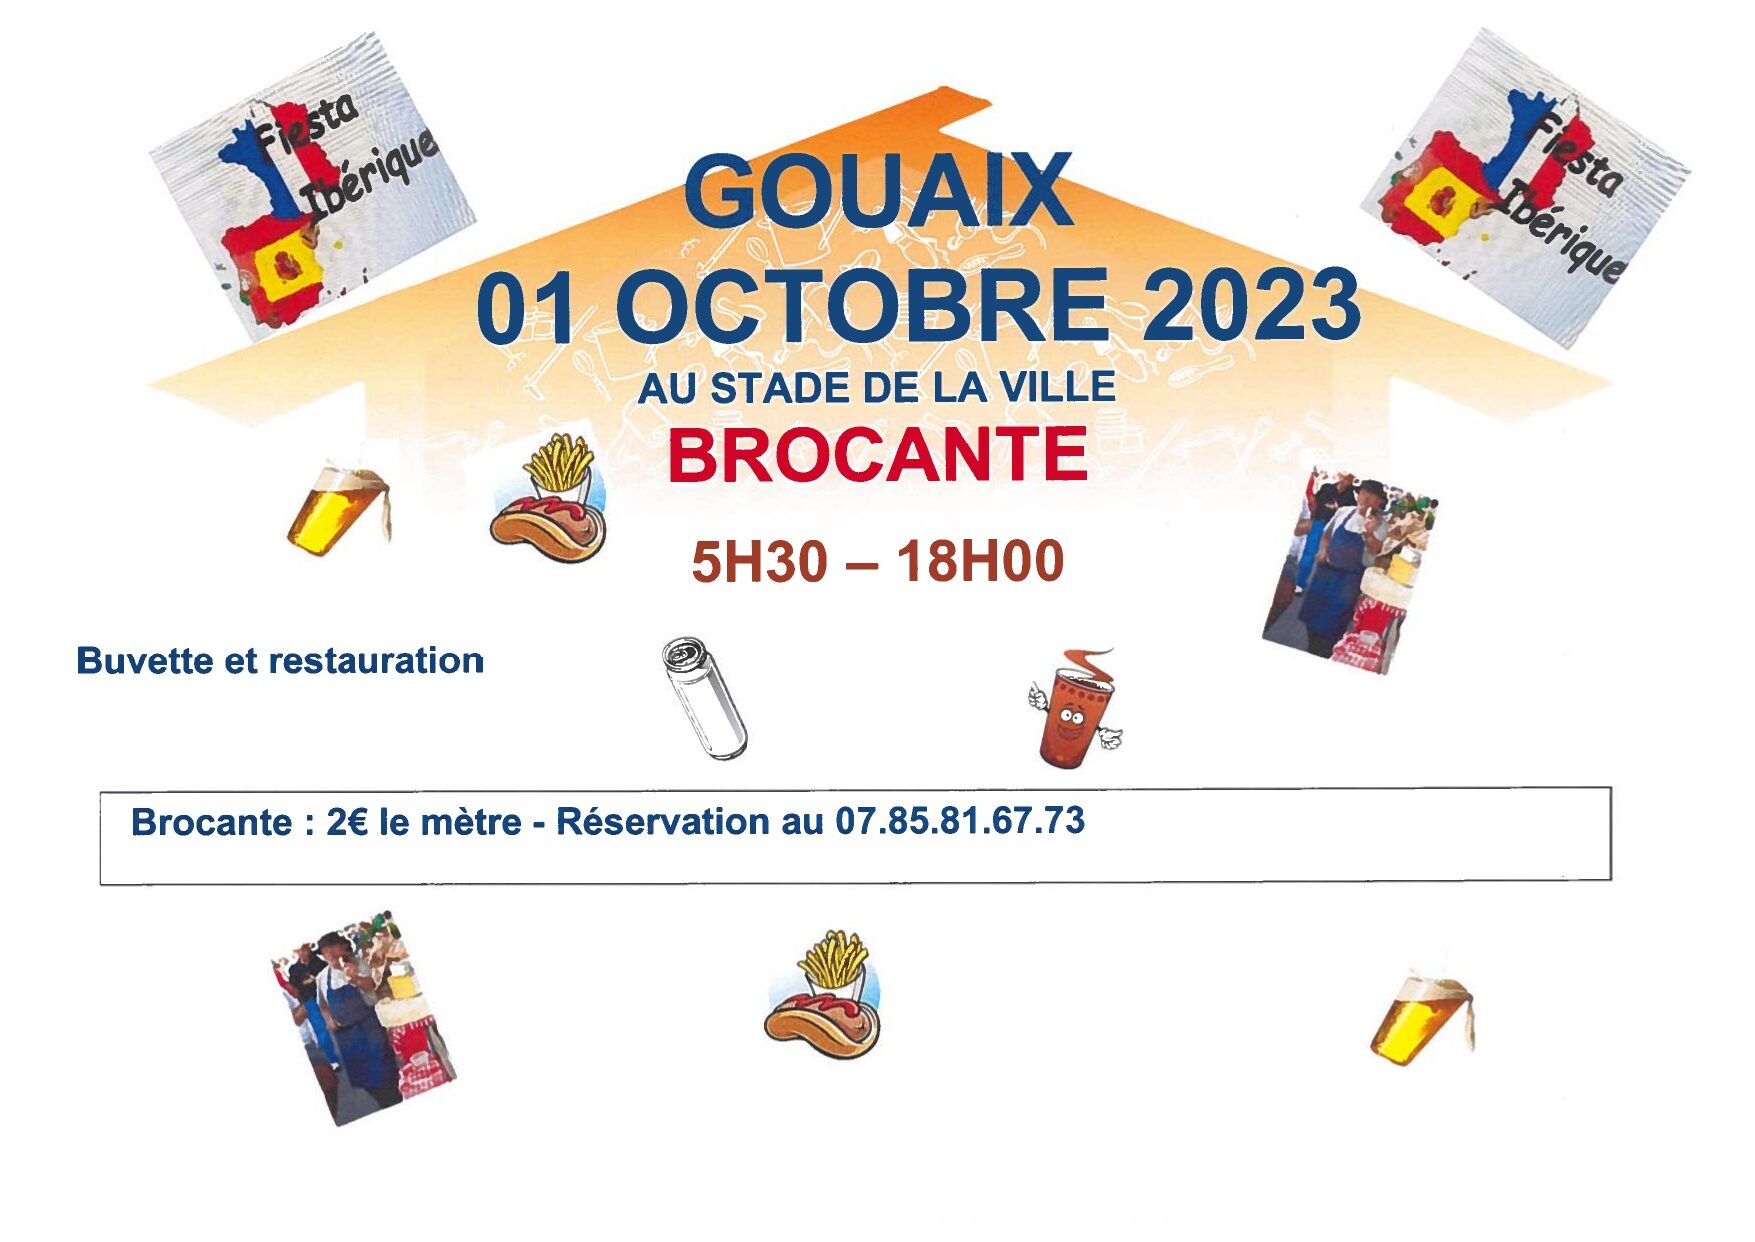 Brocante le 1er octobre 2023 à Gouaix